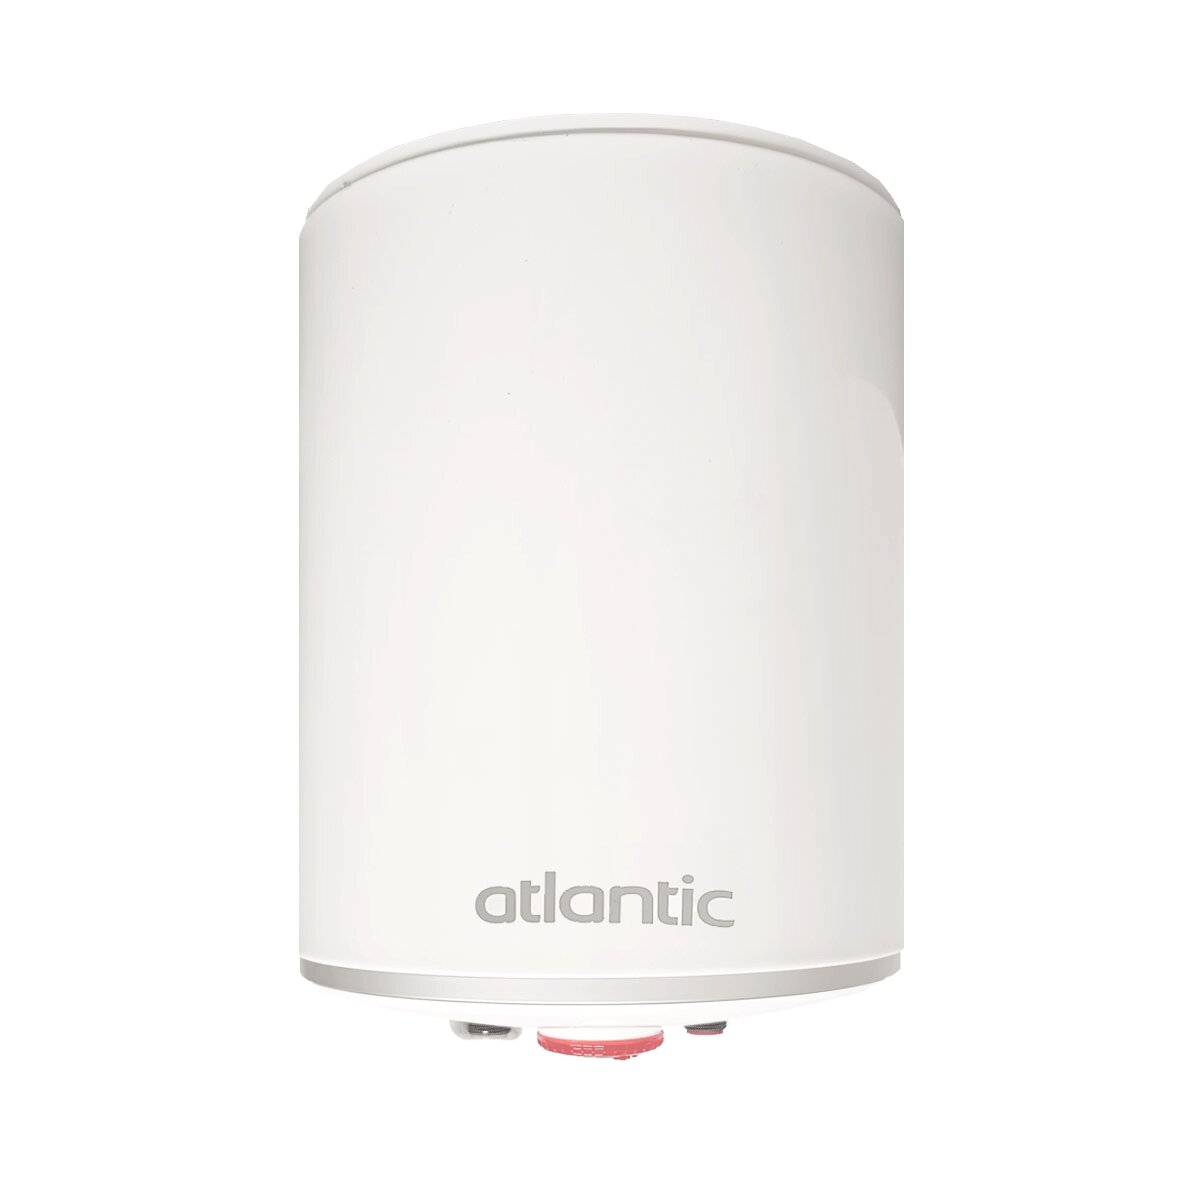 EGO Atlantic 15 liter rapid over-sink electric water heater, 2 year guarantee